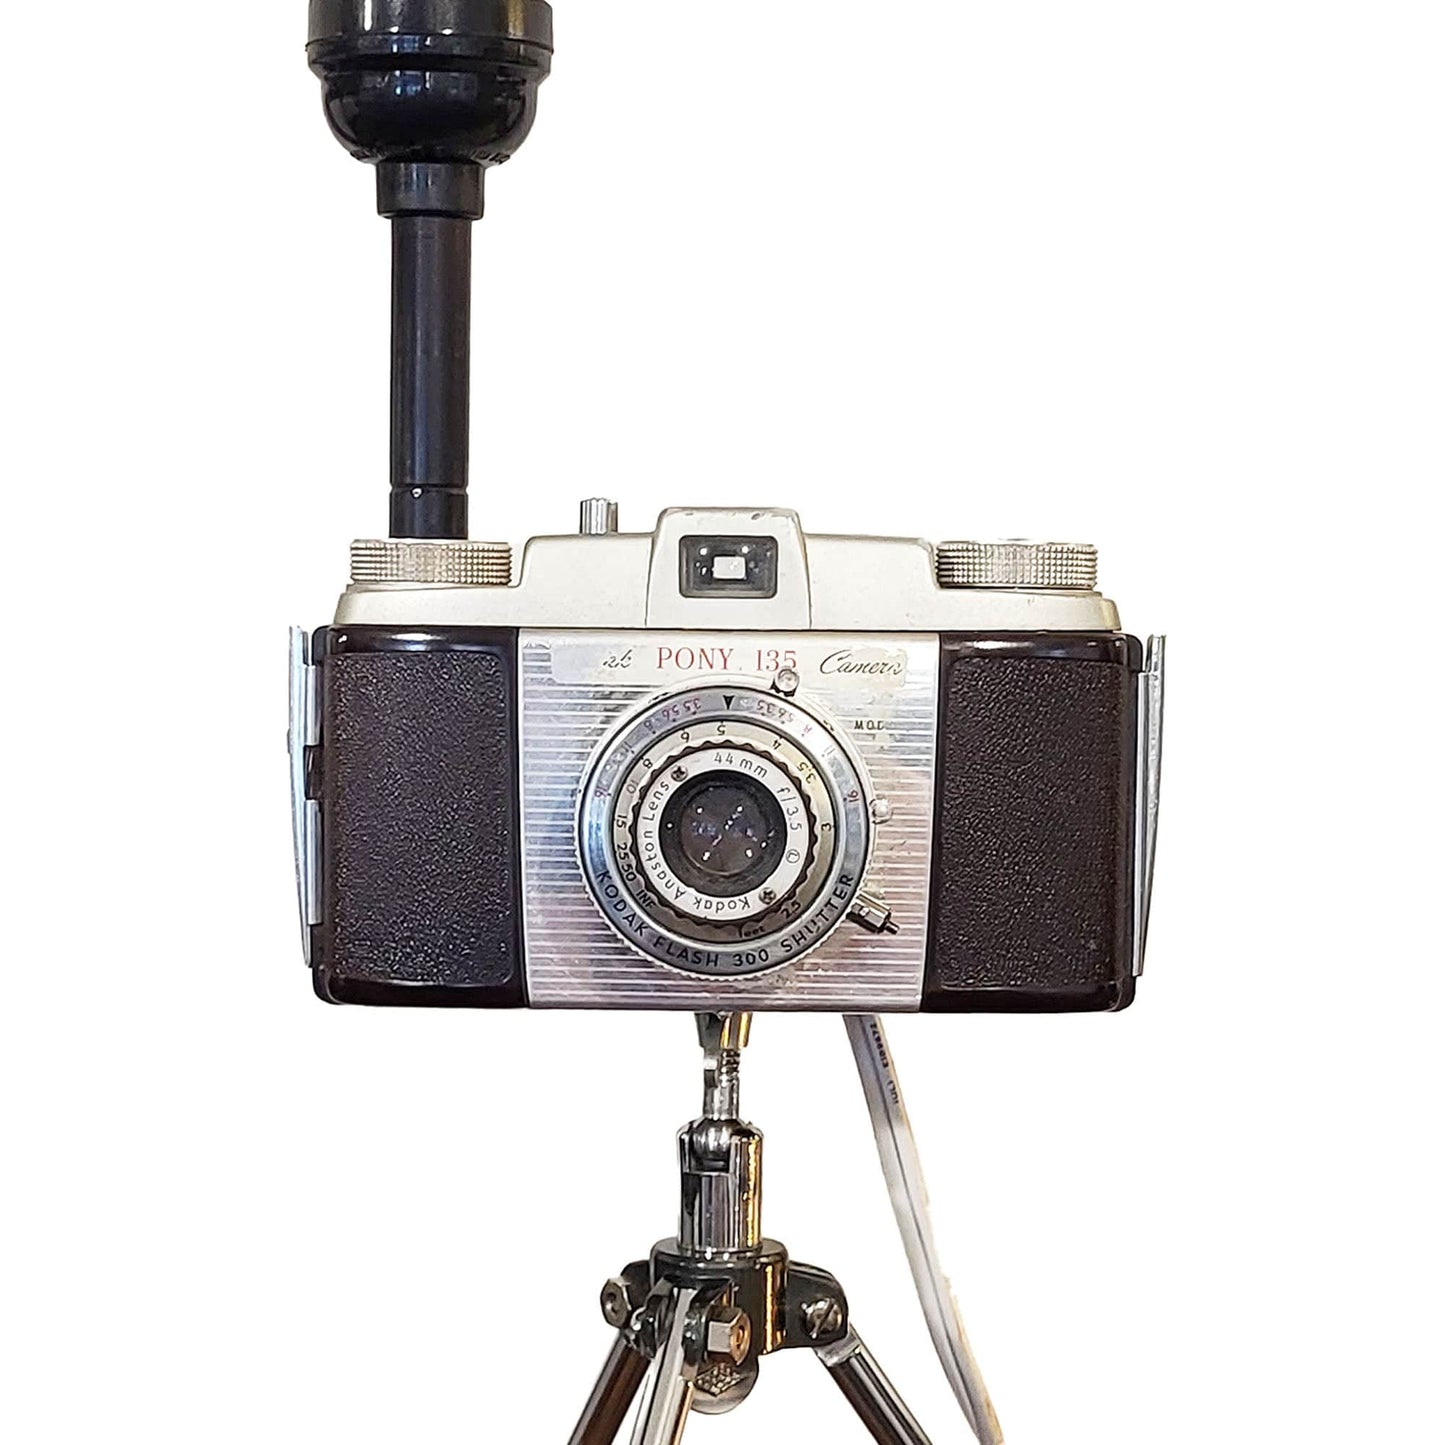 35mm Camera - Kodak Pony 135